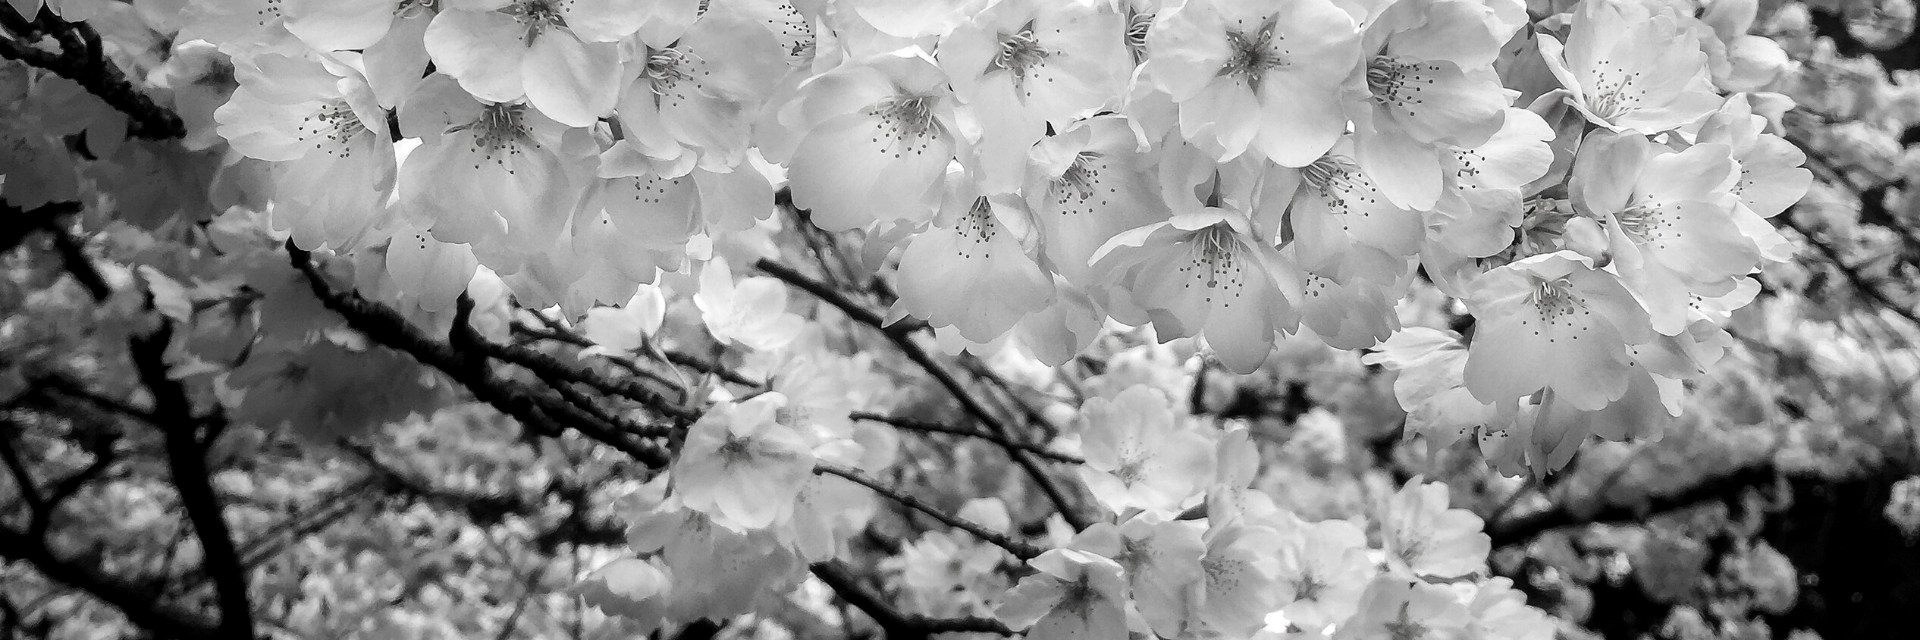 Cherry blossoms-bw-16-9